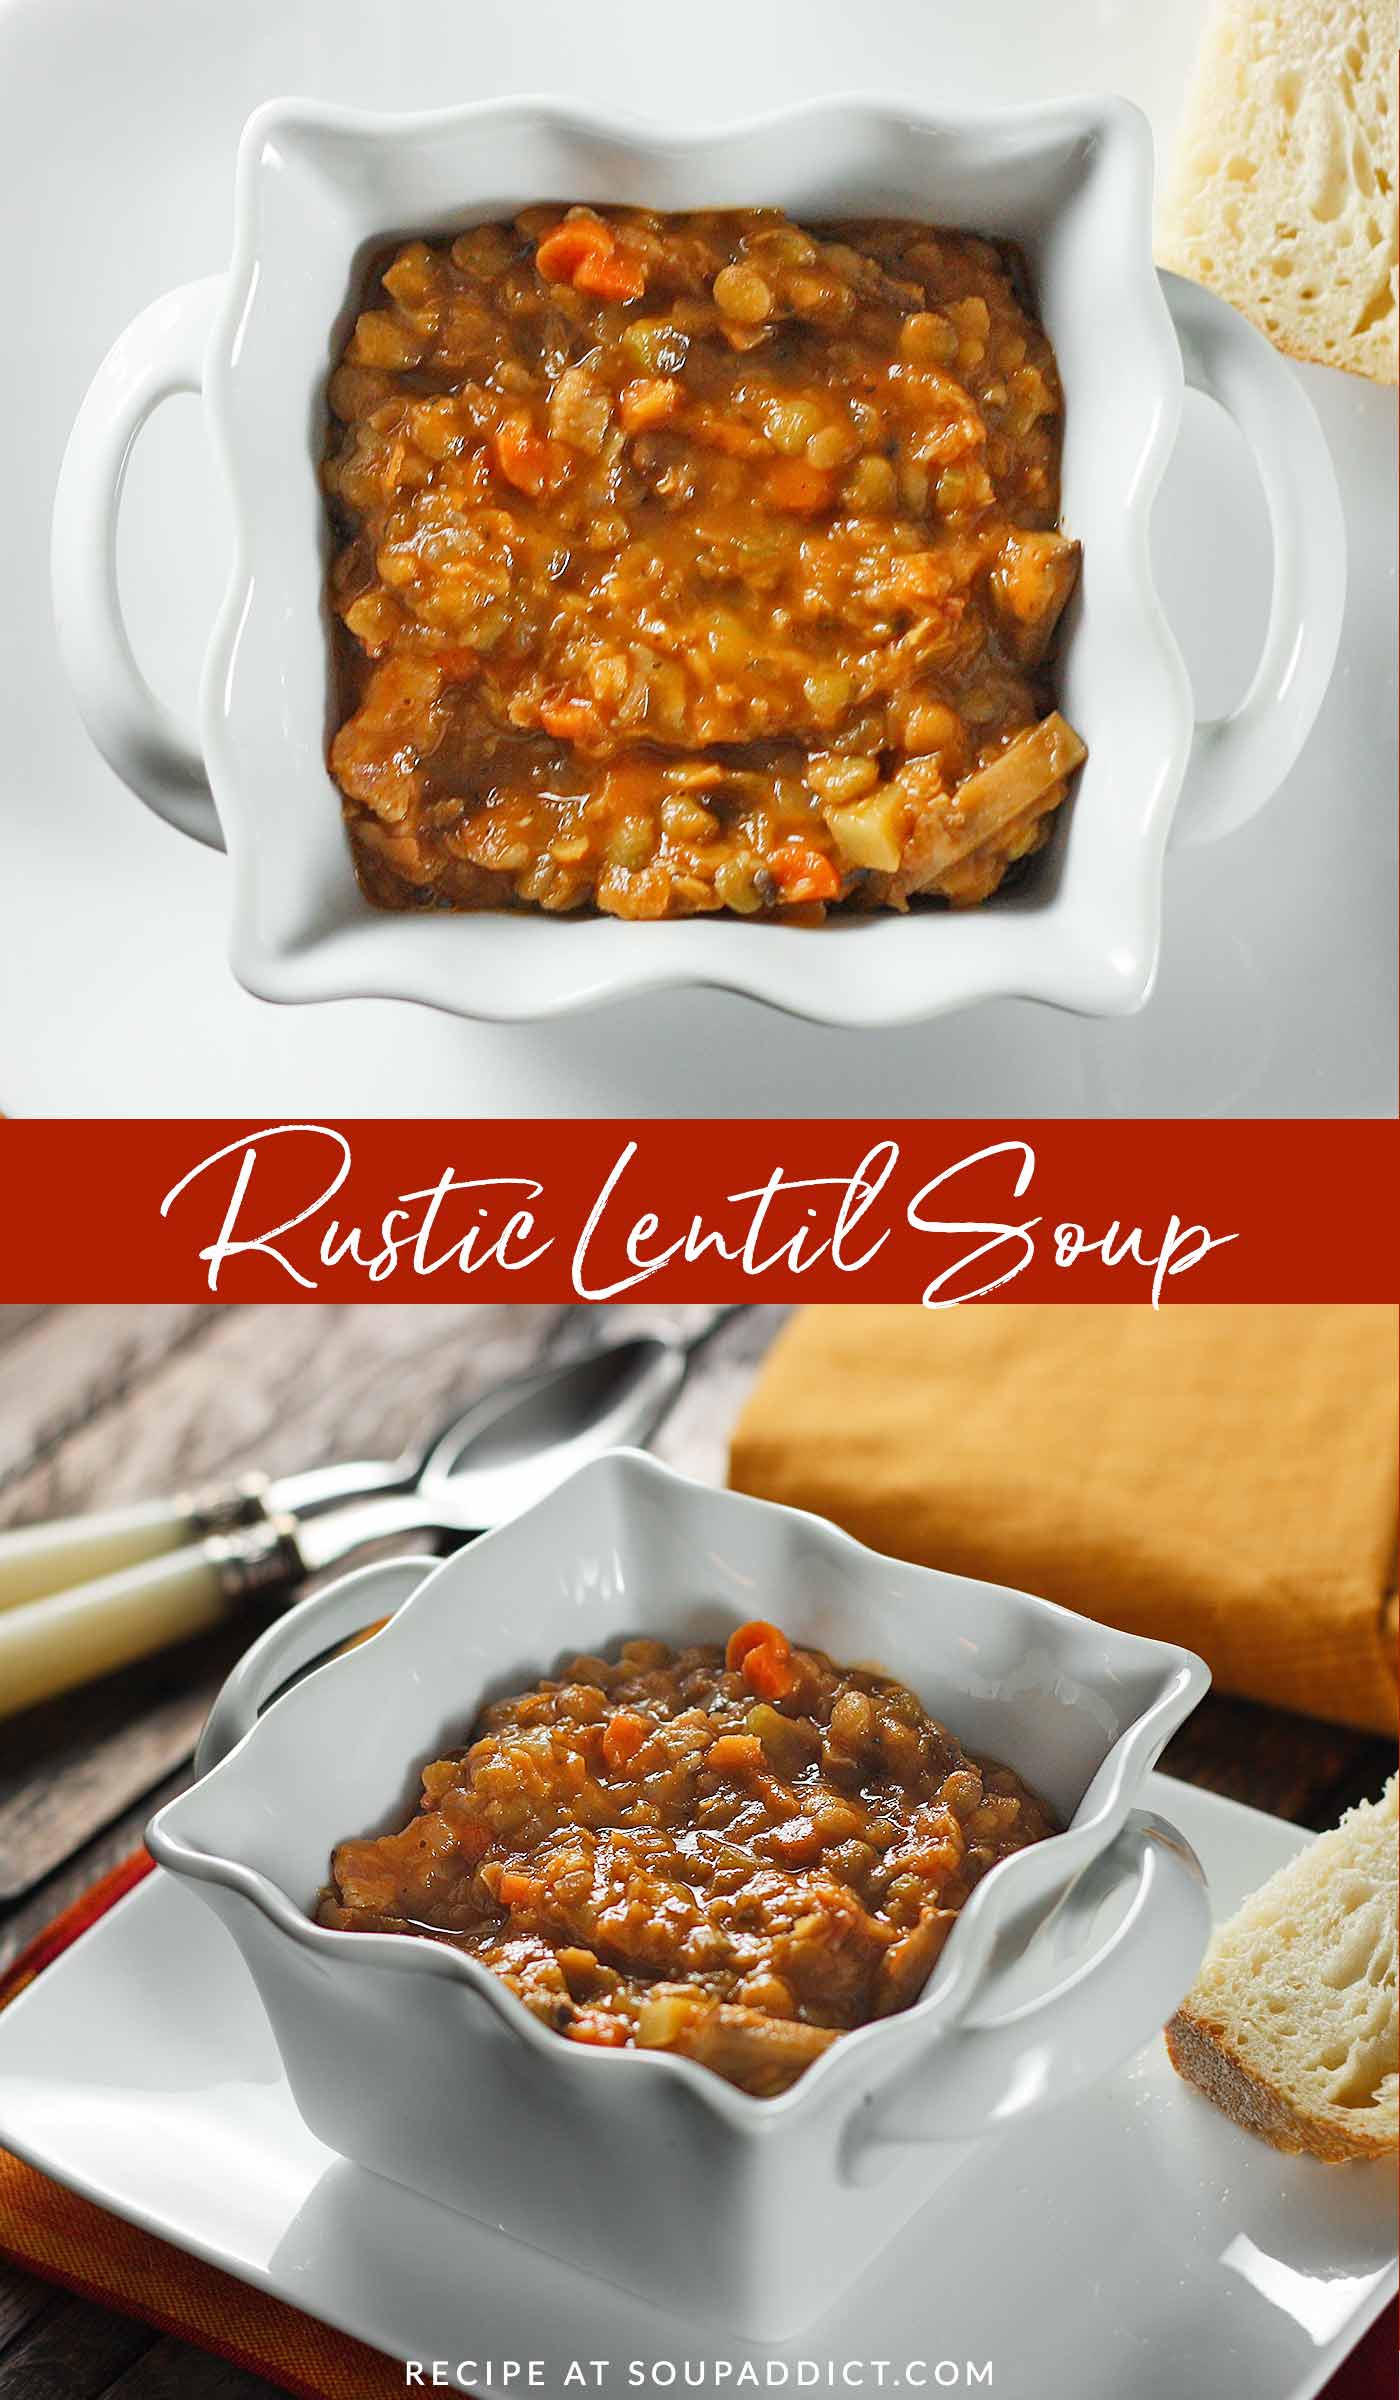 Rustic Red Lentil Soup pin image for Pinterest